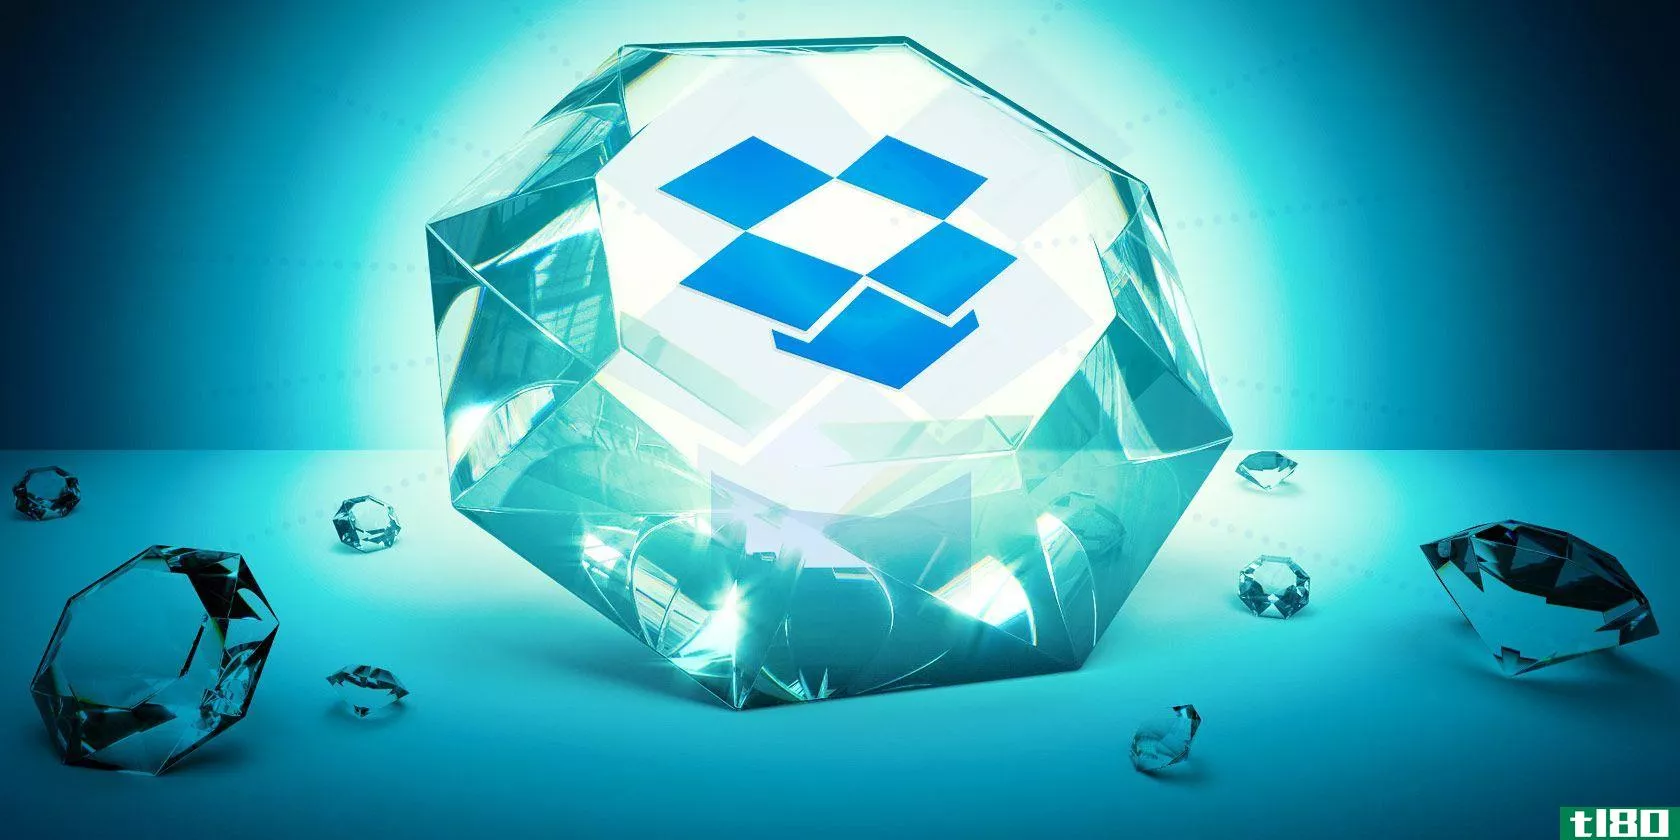 dropbox logo in diamond